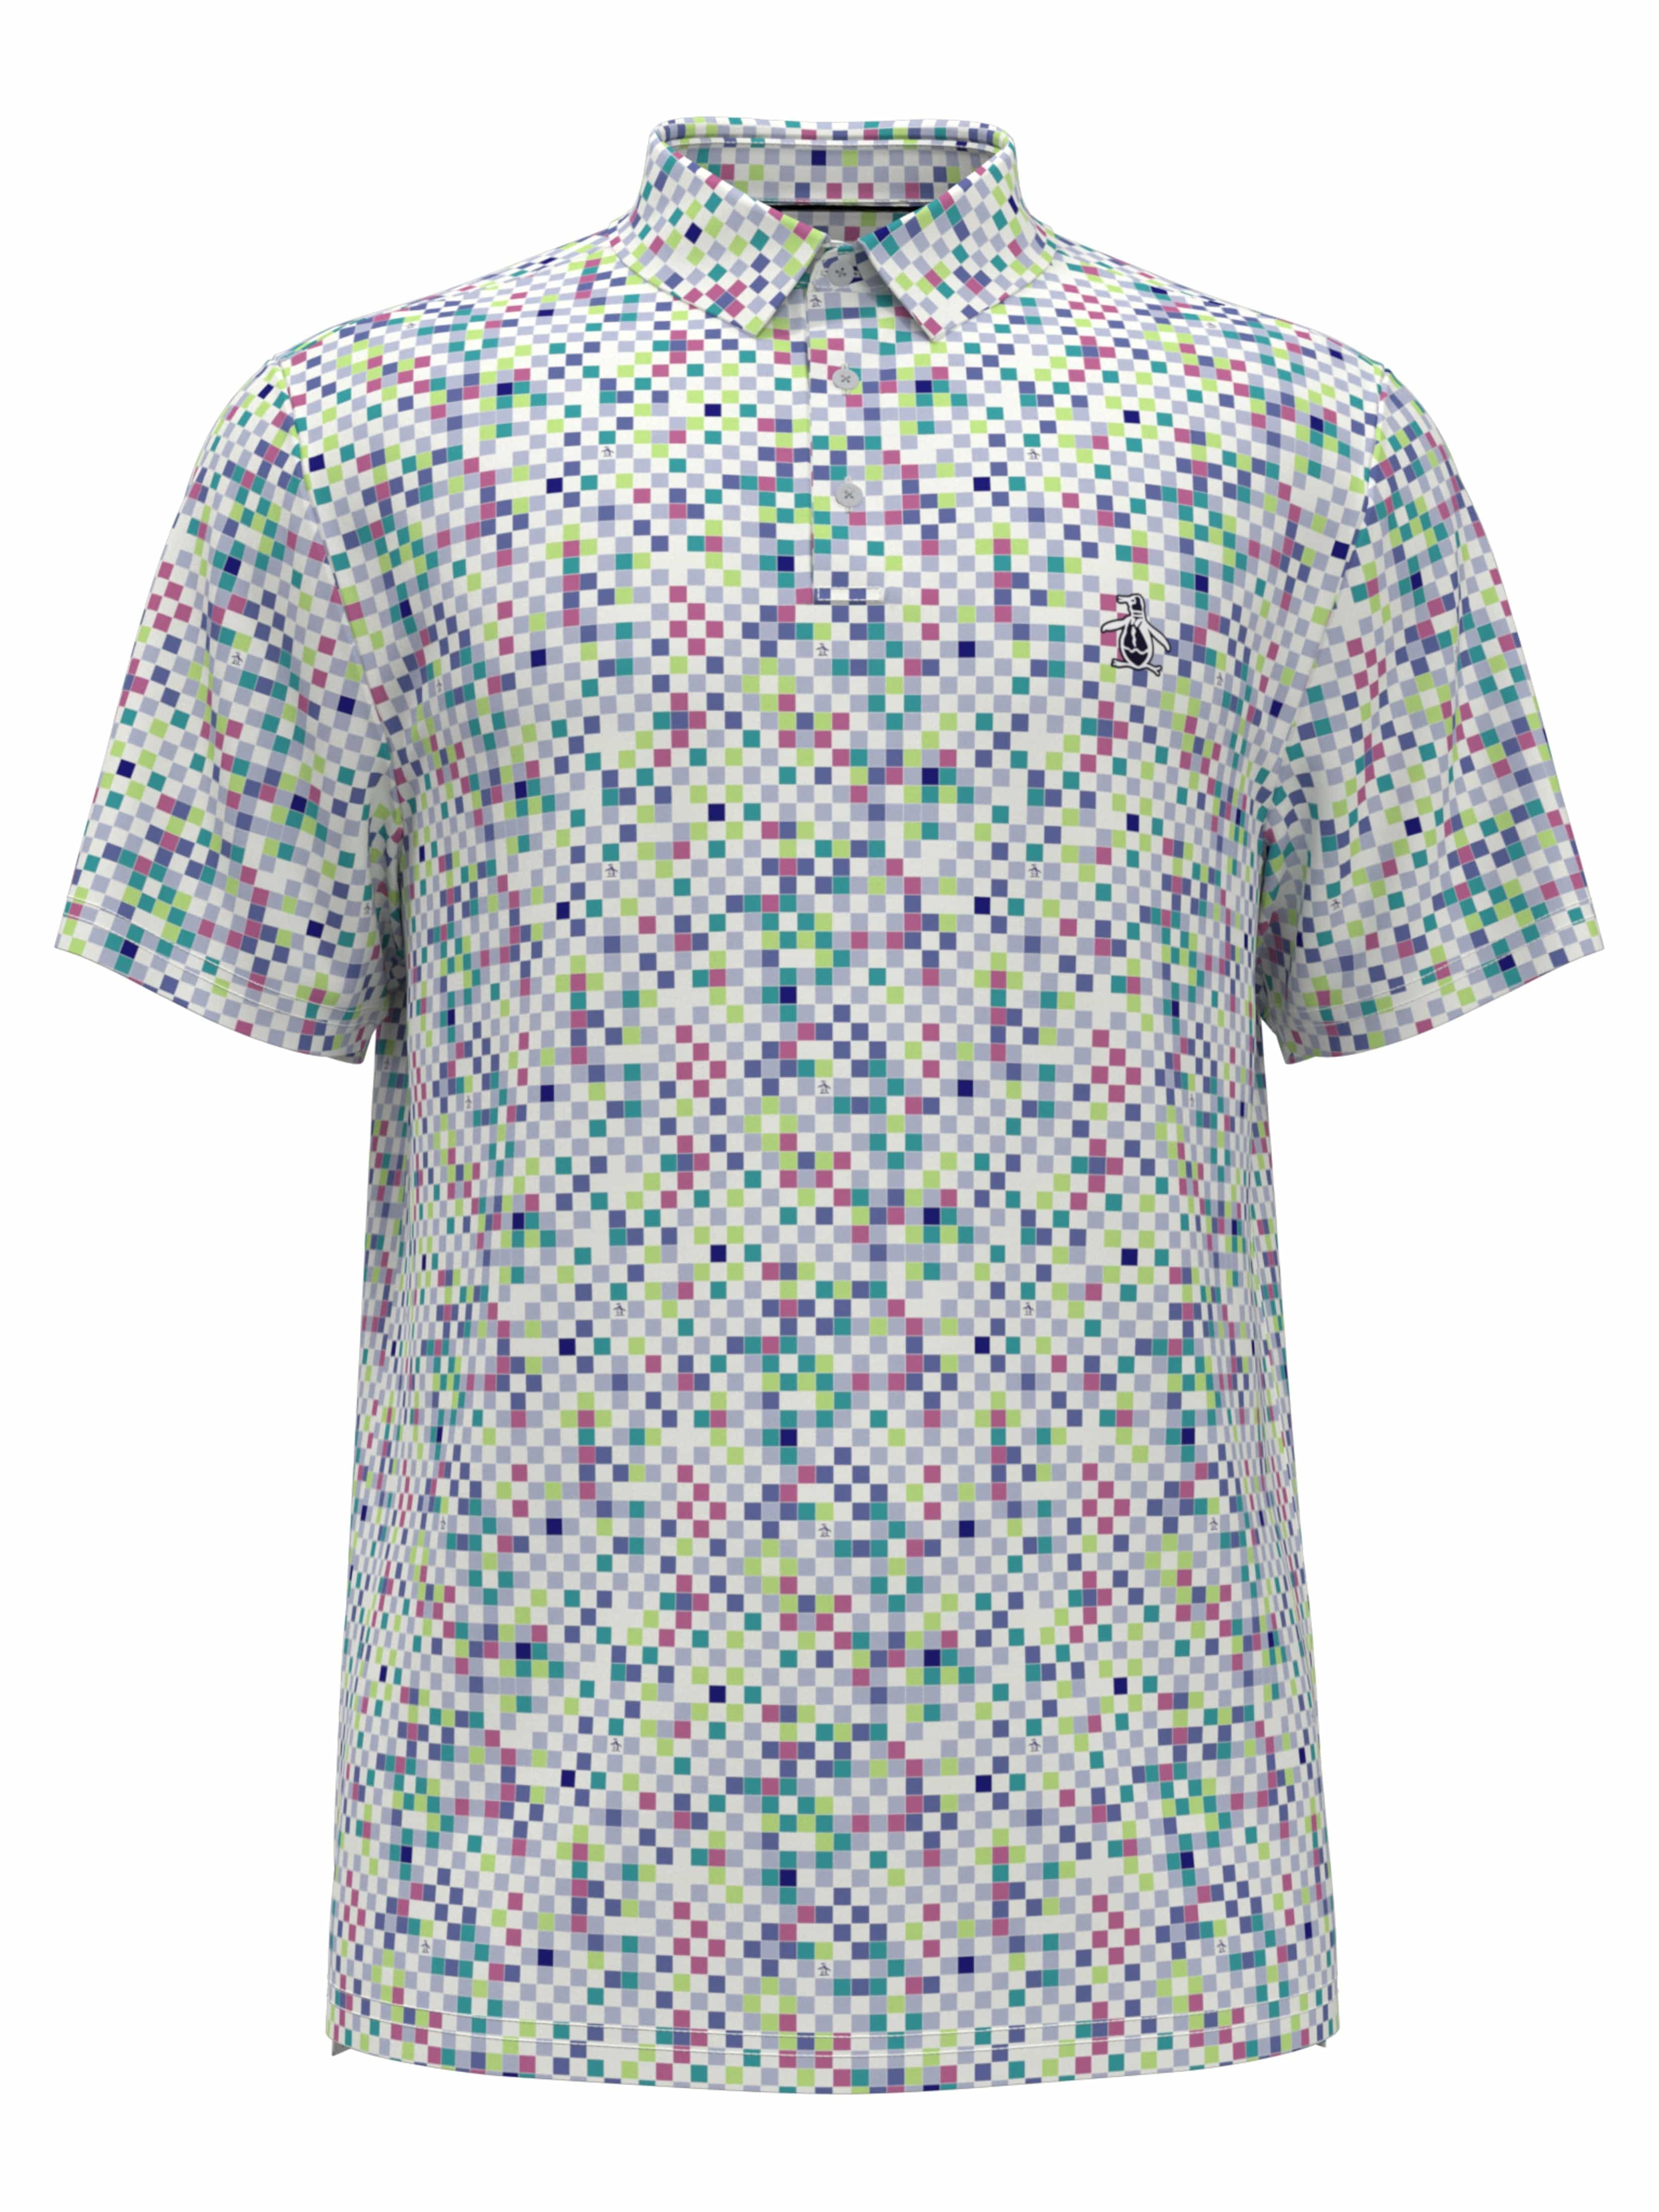 Original Penguin Mens All Over Original Check Print Golf Polo Shirt, Size XL, White, Polyester/Recycled Polyester/Elastane | Golf Apparel Shop